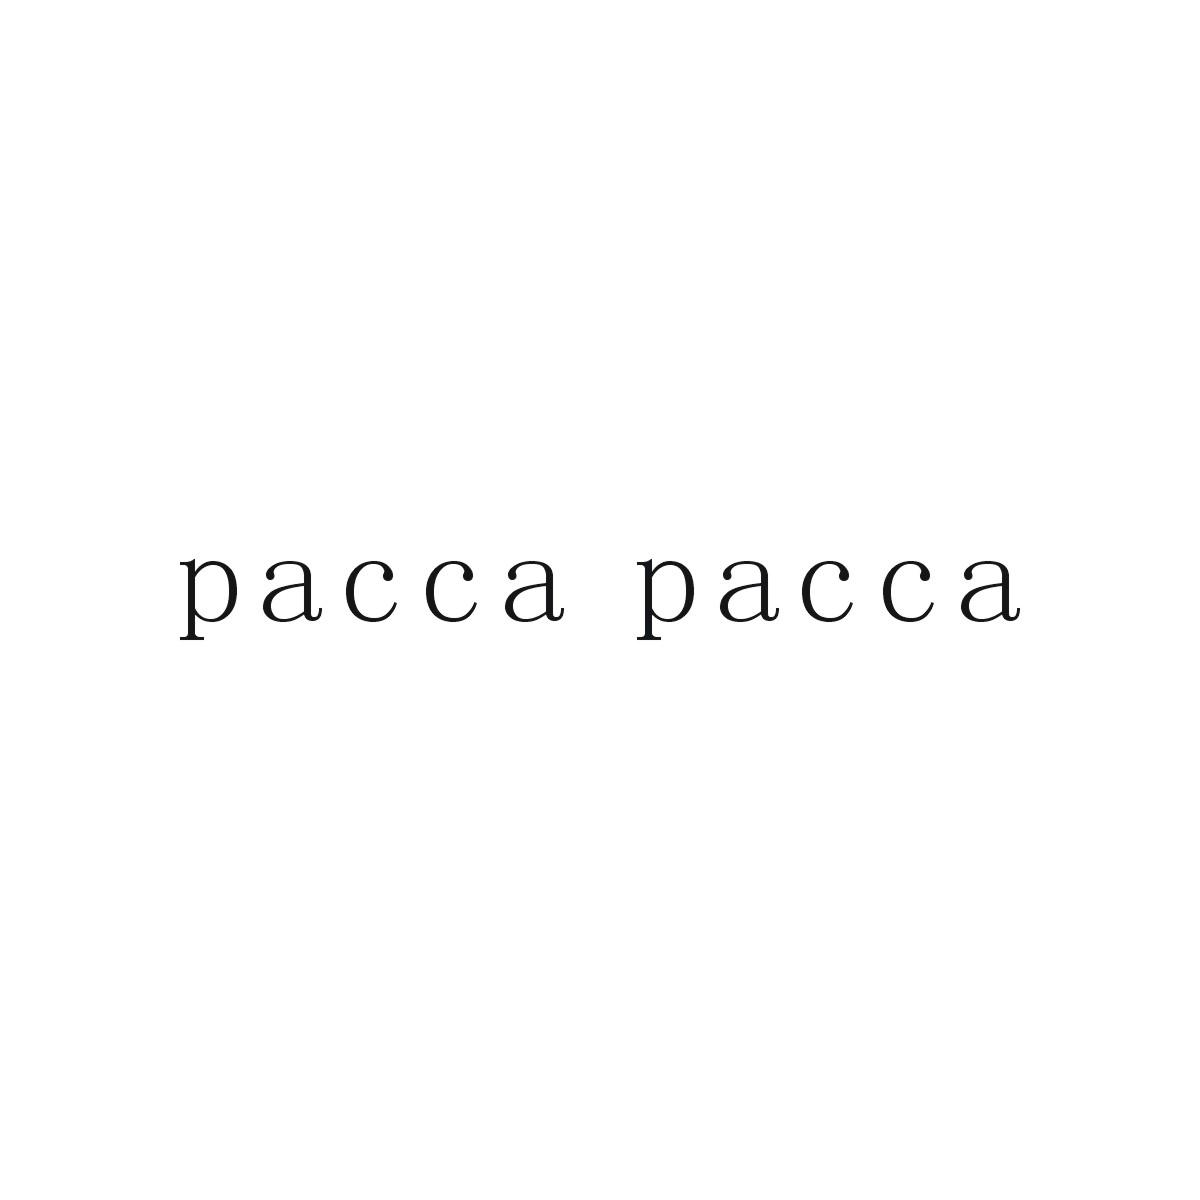 PACCA PACCA商标转让